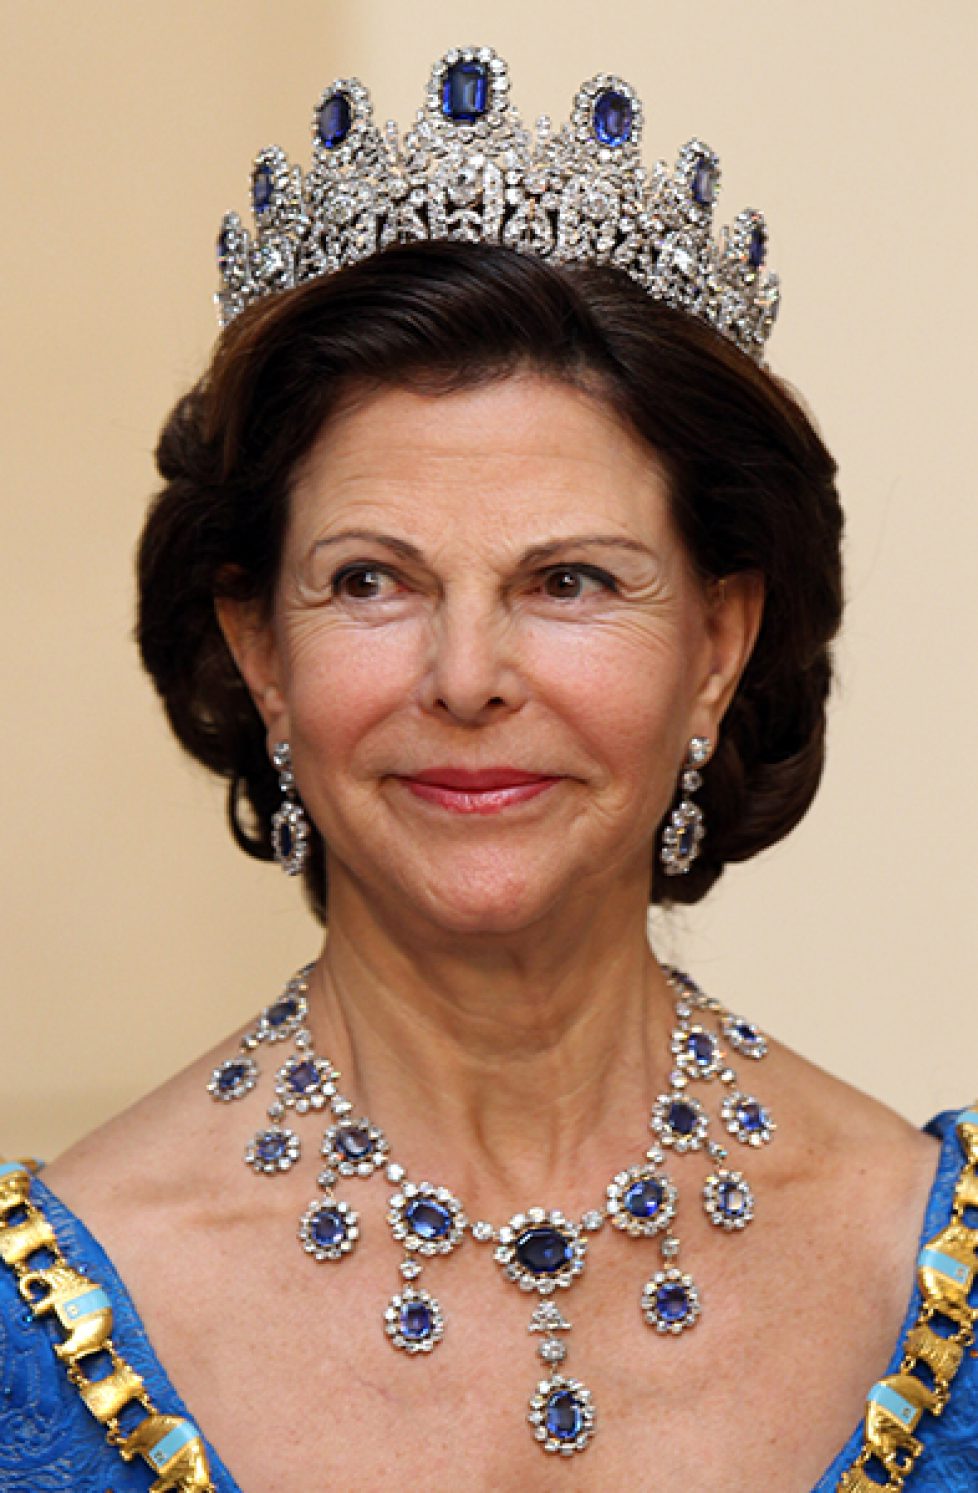 Queen Margrethe II of Denmark Celebrates 40 Years on The Throne - Celebratory Service